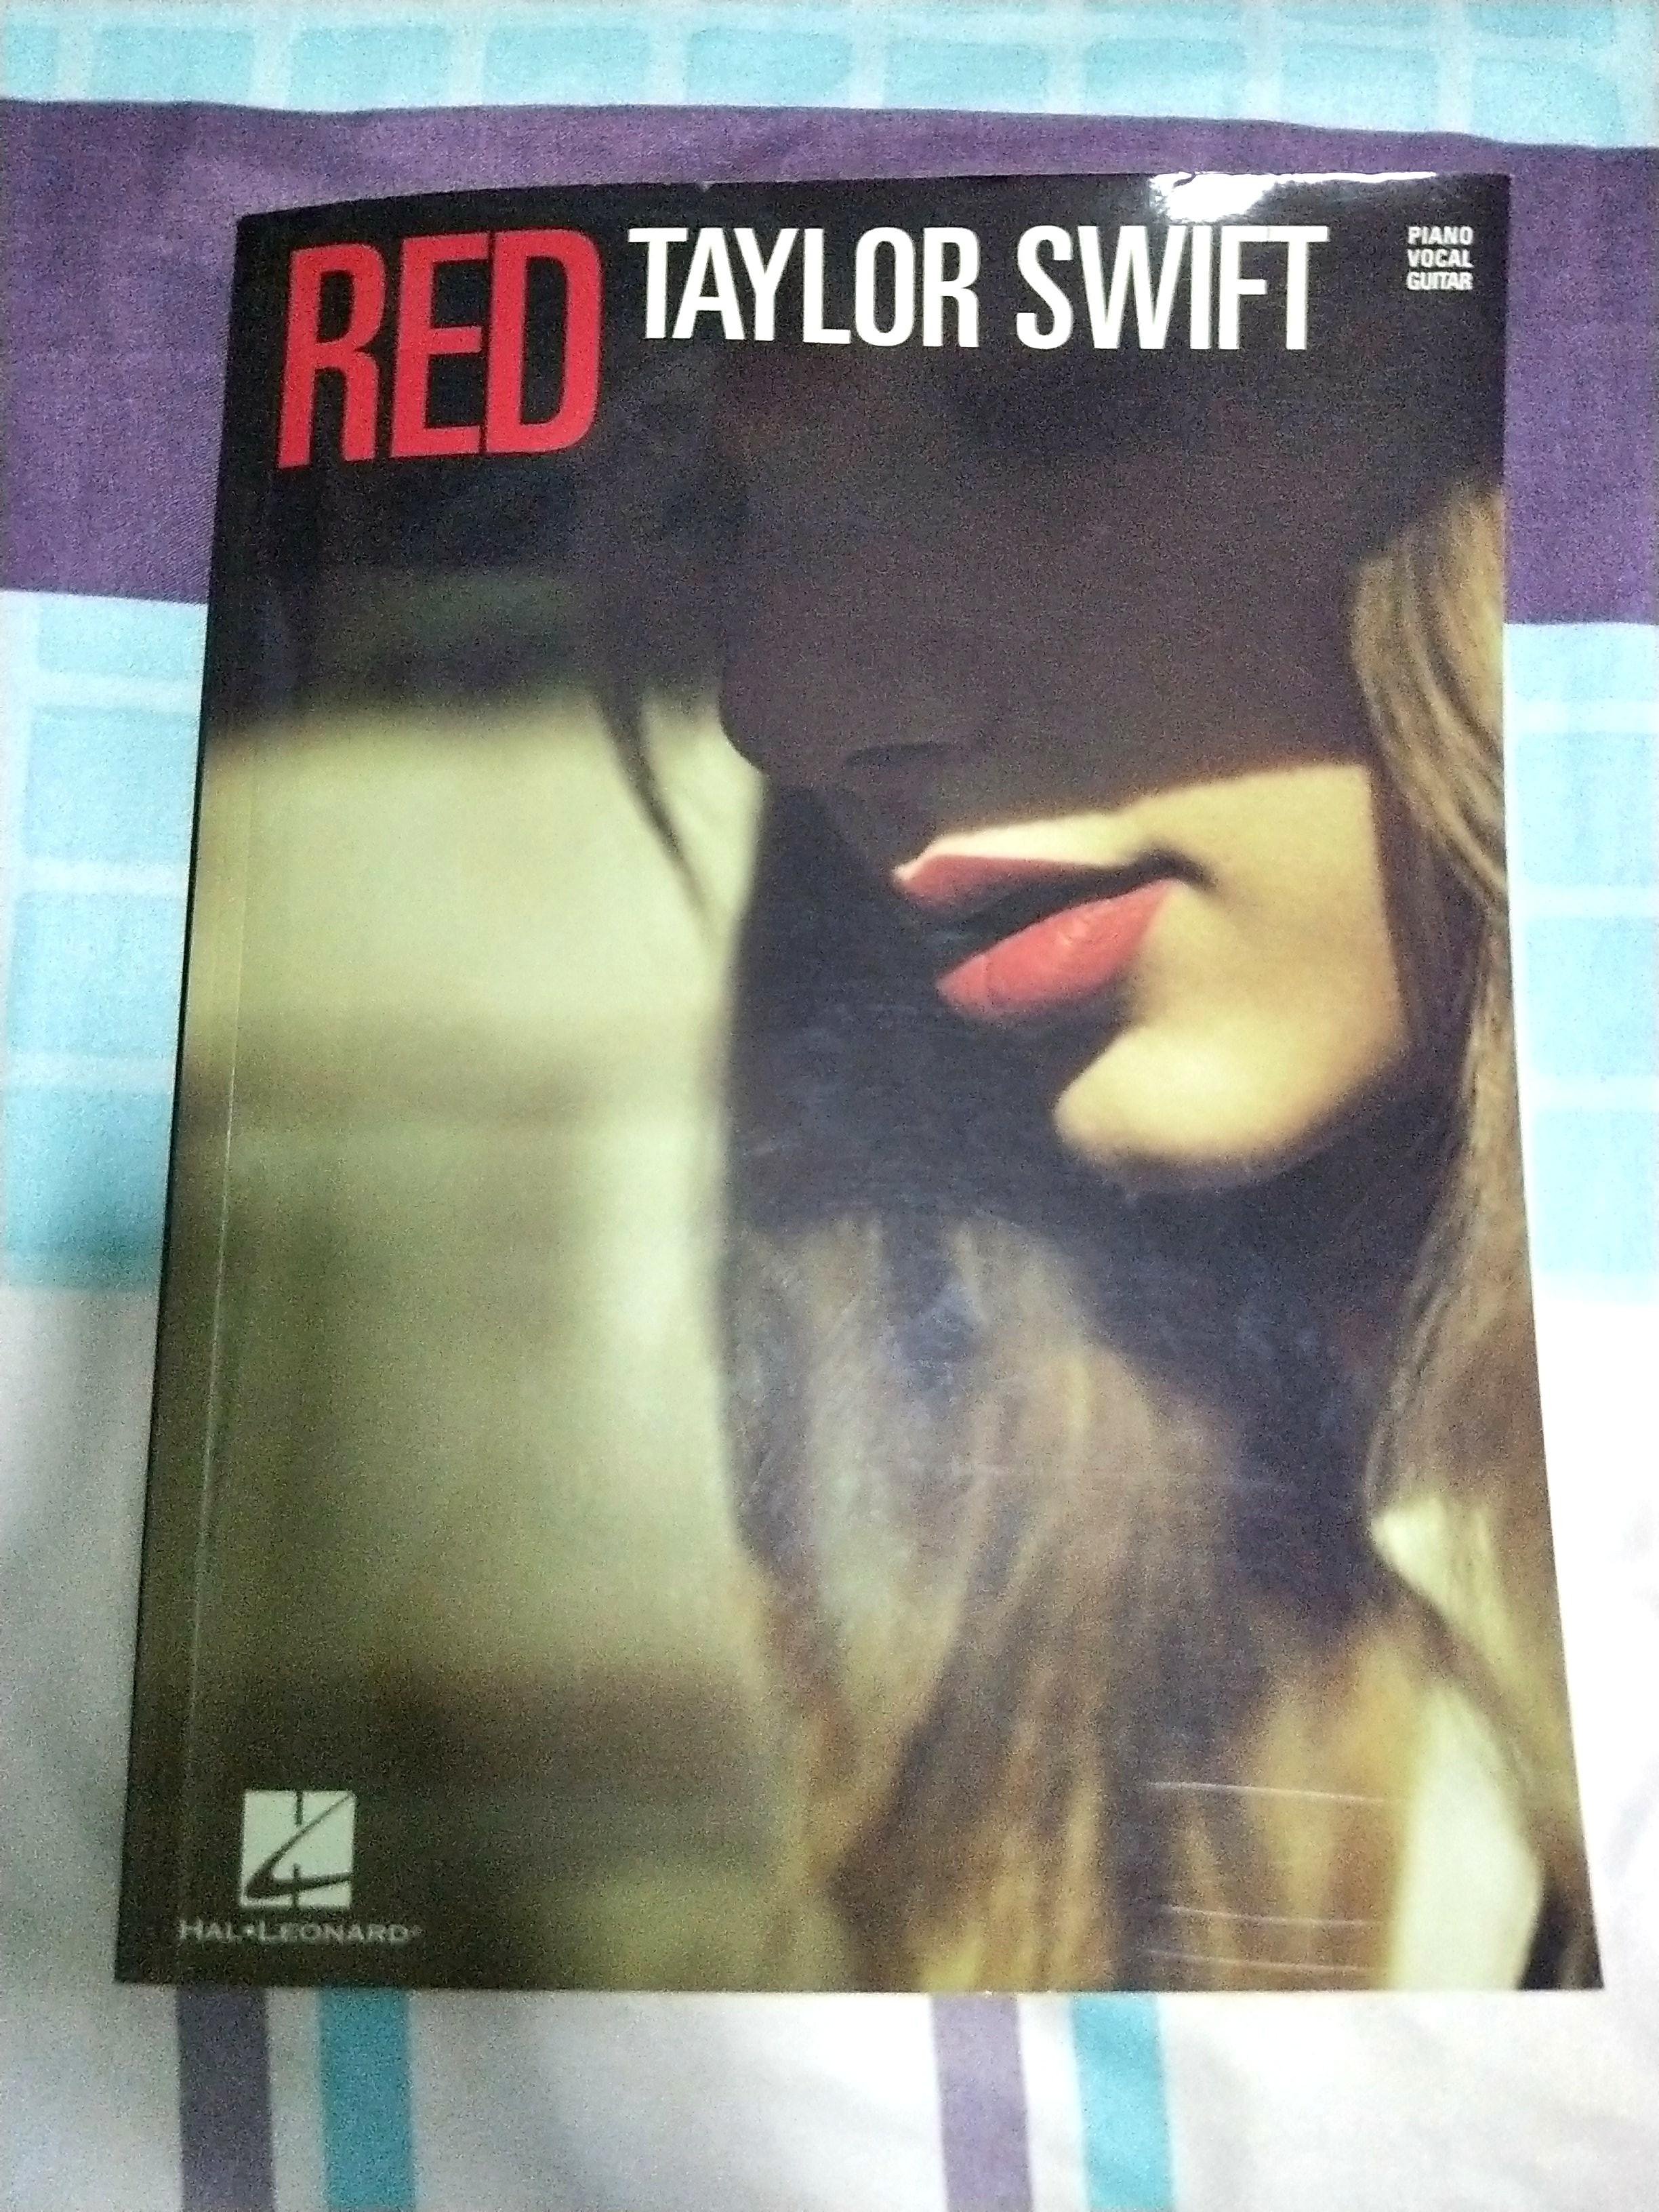 Taylor Swift Red Pianoguitarvocal Scorebook Music Media